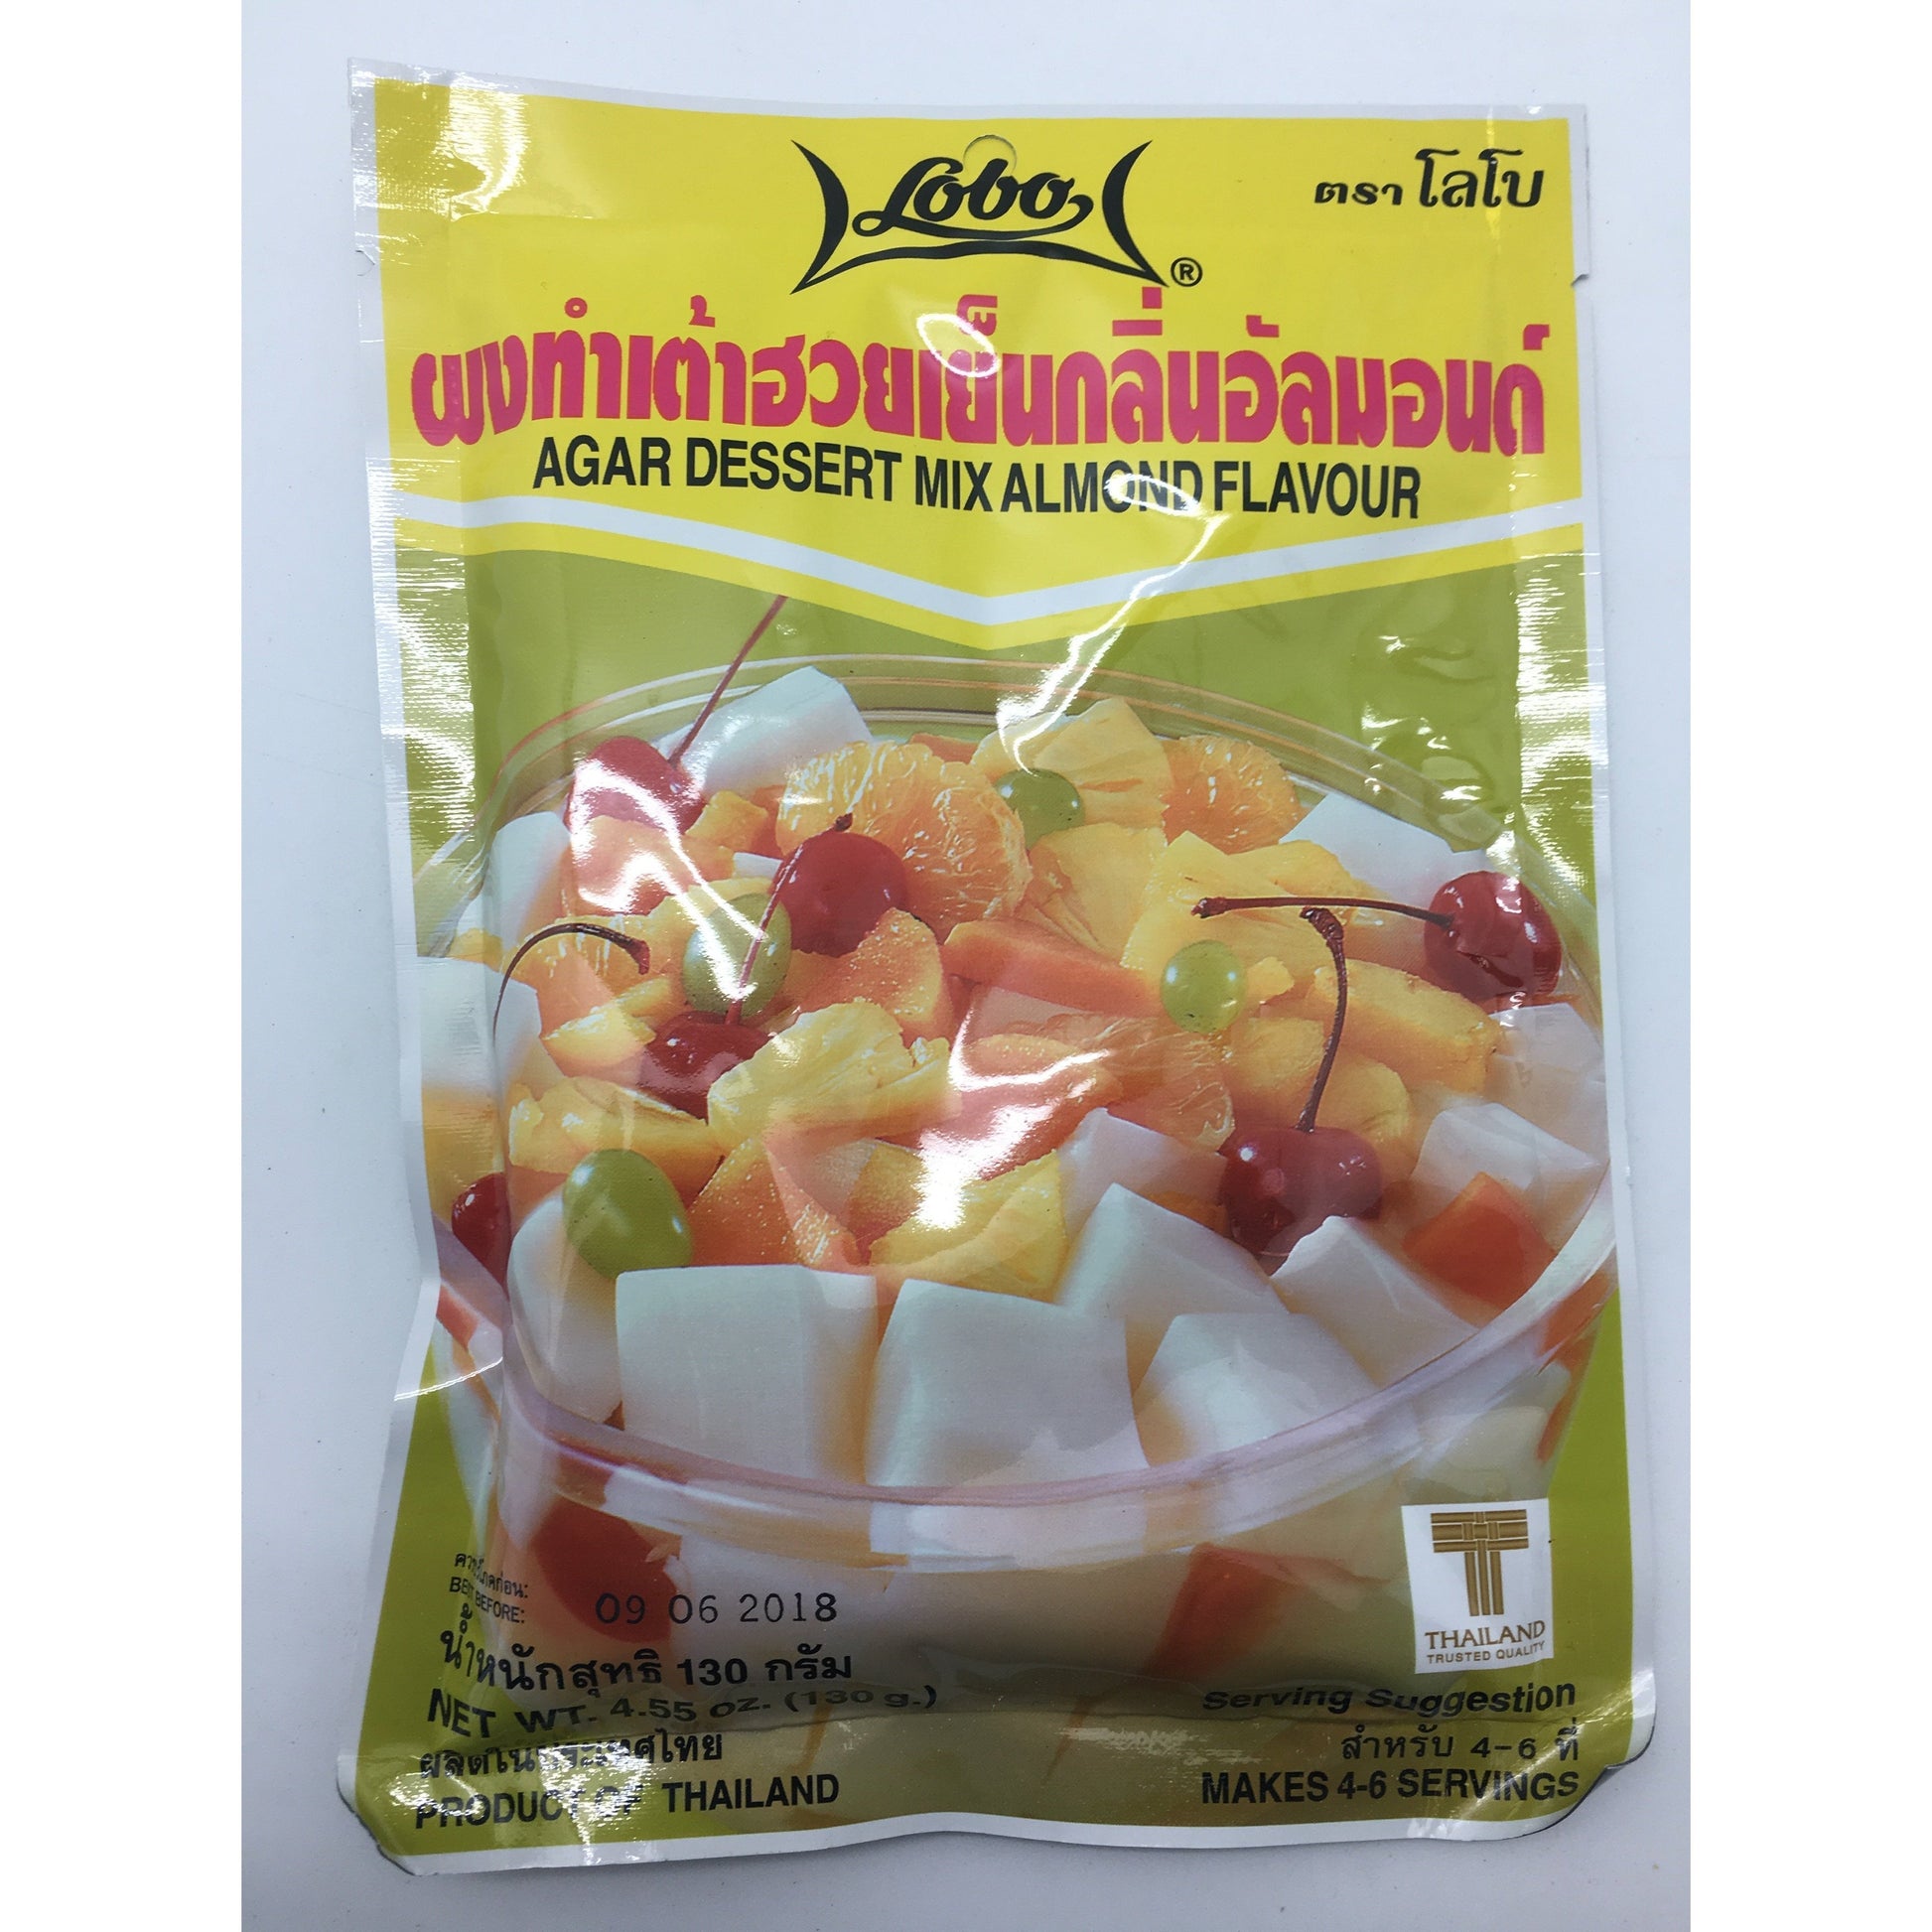 PD008D Lobo Brand -Agar Dessert Mix Almond Flavour 130g -  120 bags / 1CTN - New Eastland Pty Ltd - Asian food wholesalers